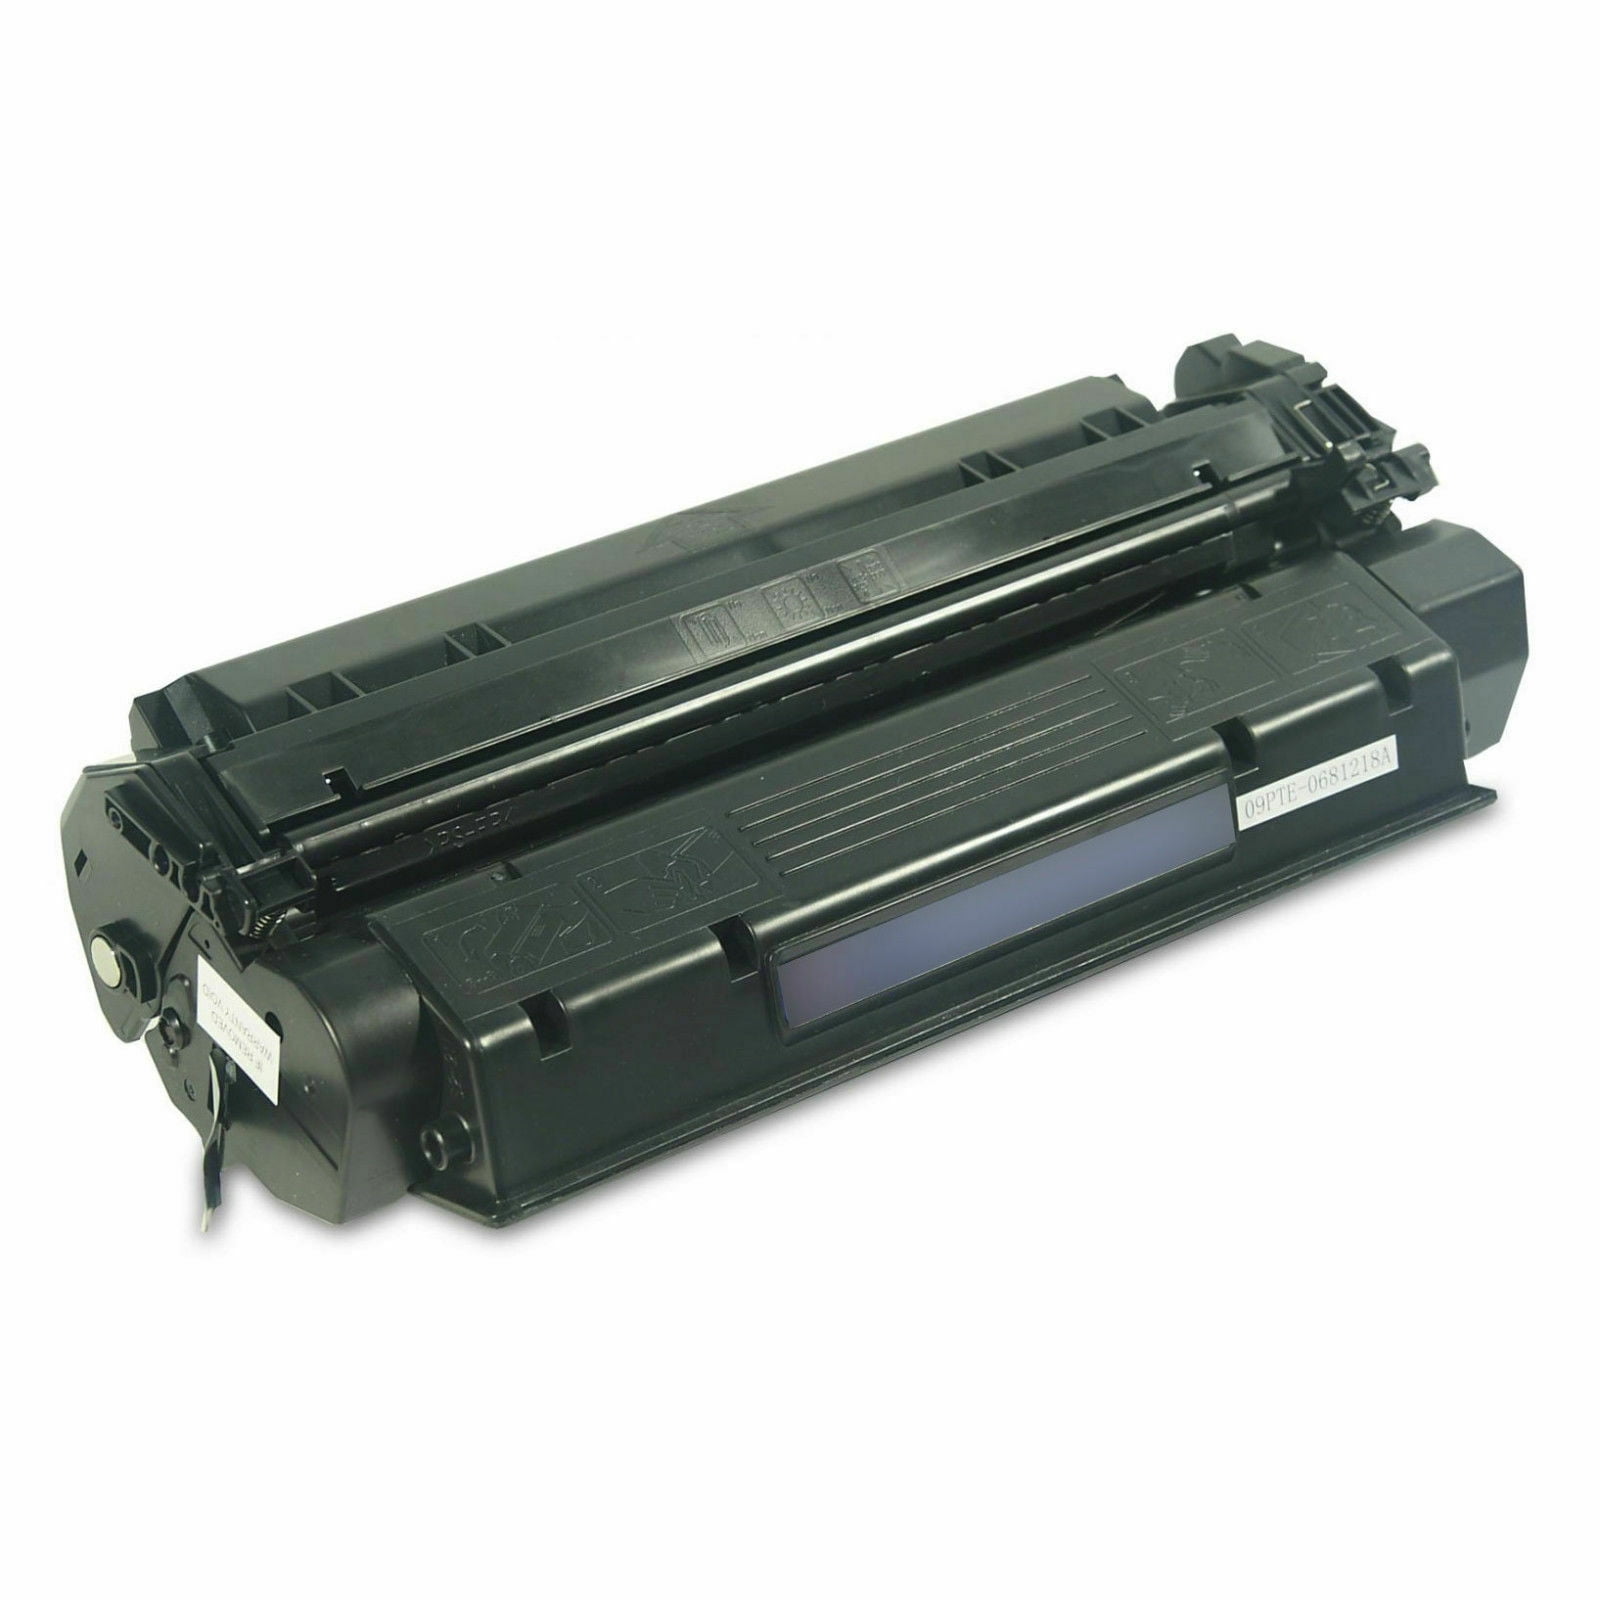 3PK Q2624A 24A Toner Cartridge Black Fit For HP LaserJet 1150 Printer 